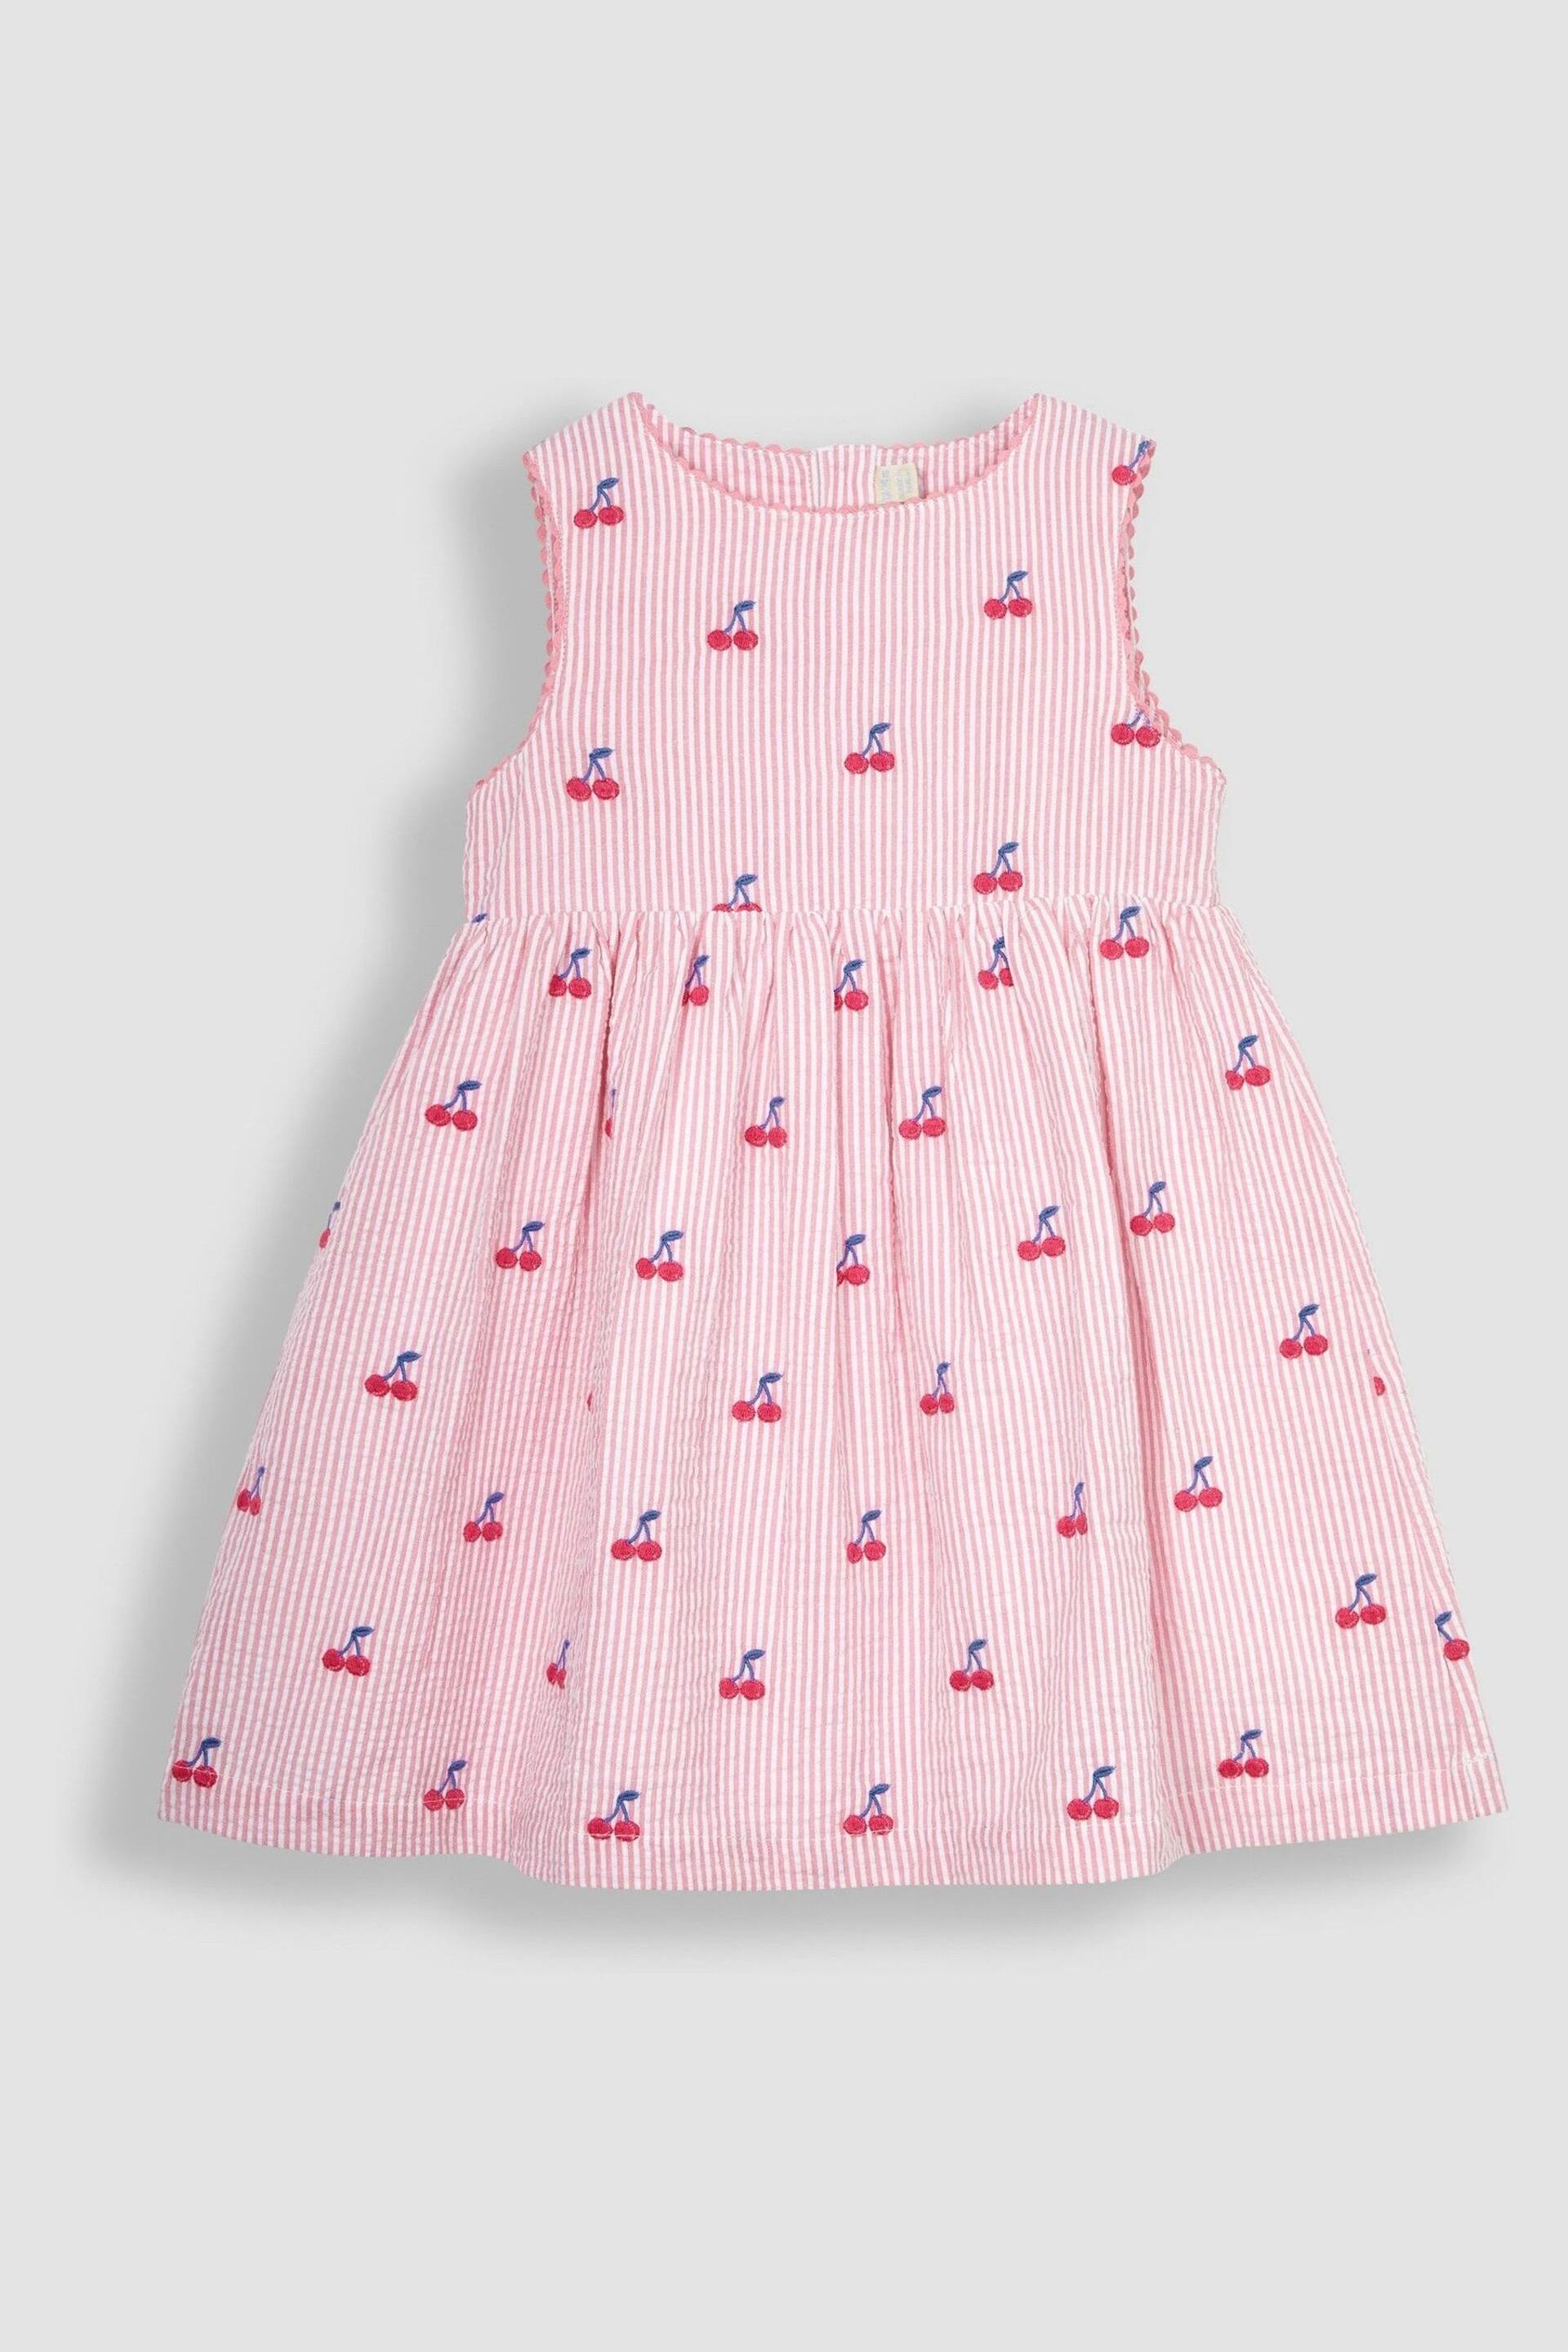 JoJo Maman Bébé Pink Cherry Stripe Embroidered Summer Dress - Image 3 of 5